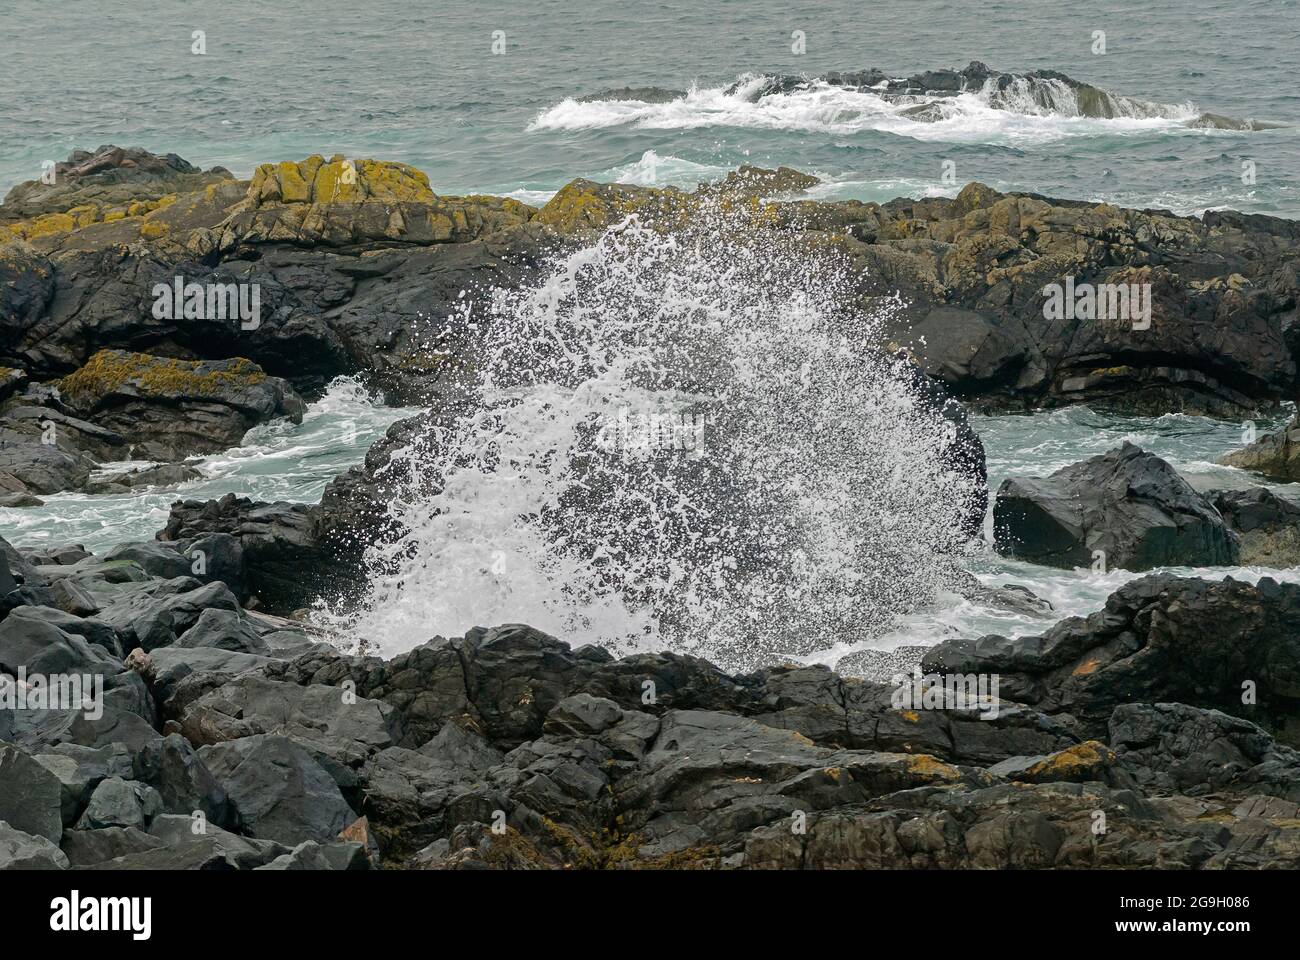 Waves and spray crashing against rocks Stock Photo